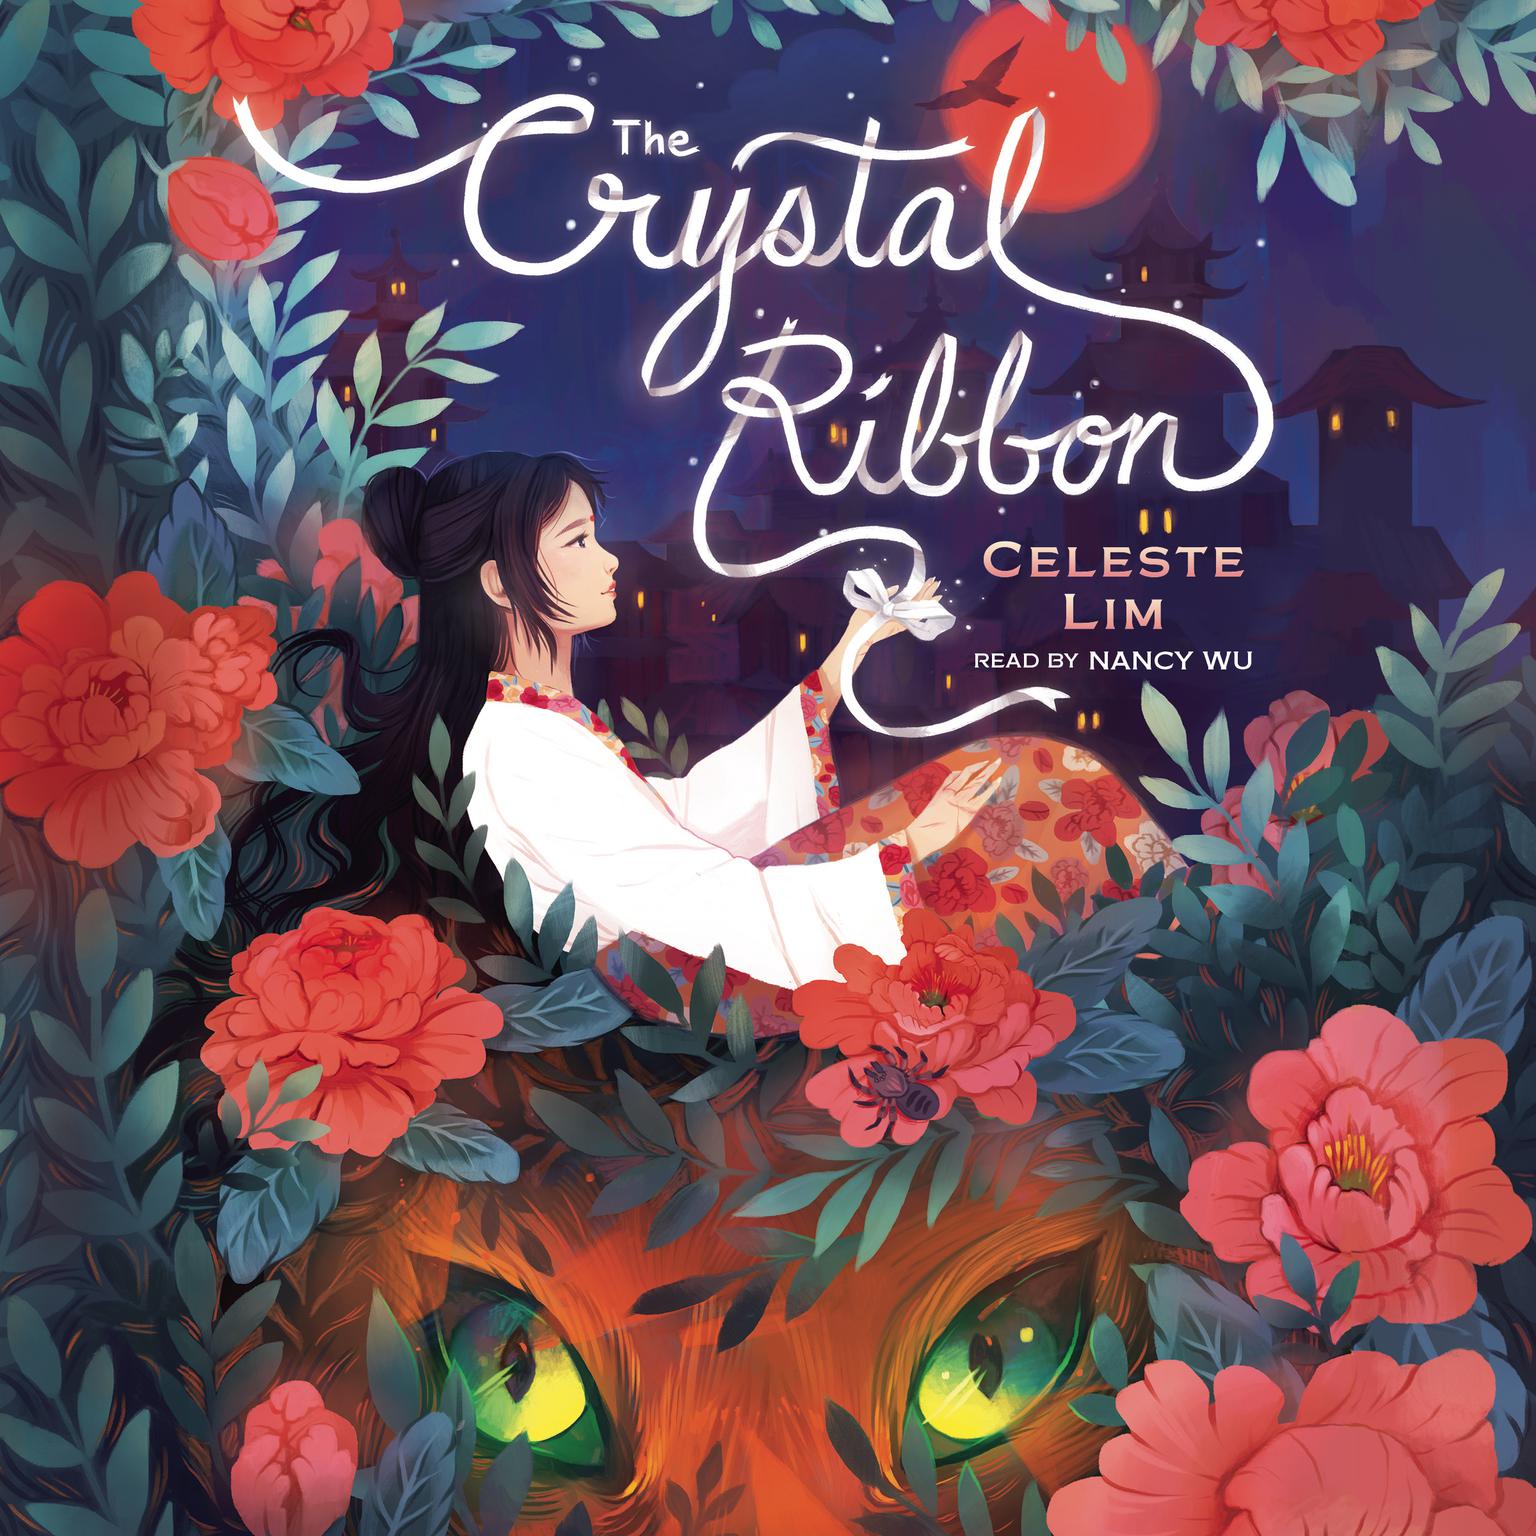 The Crystal Ribbon Audiobook, by Celeste Lim